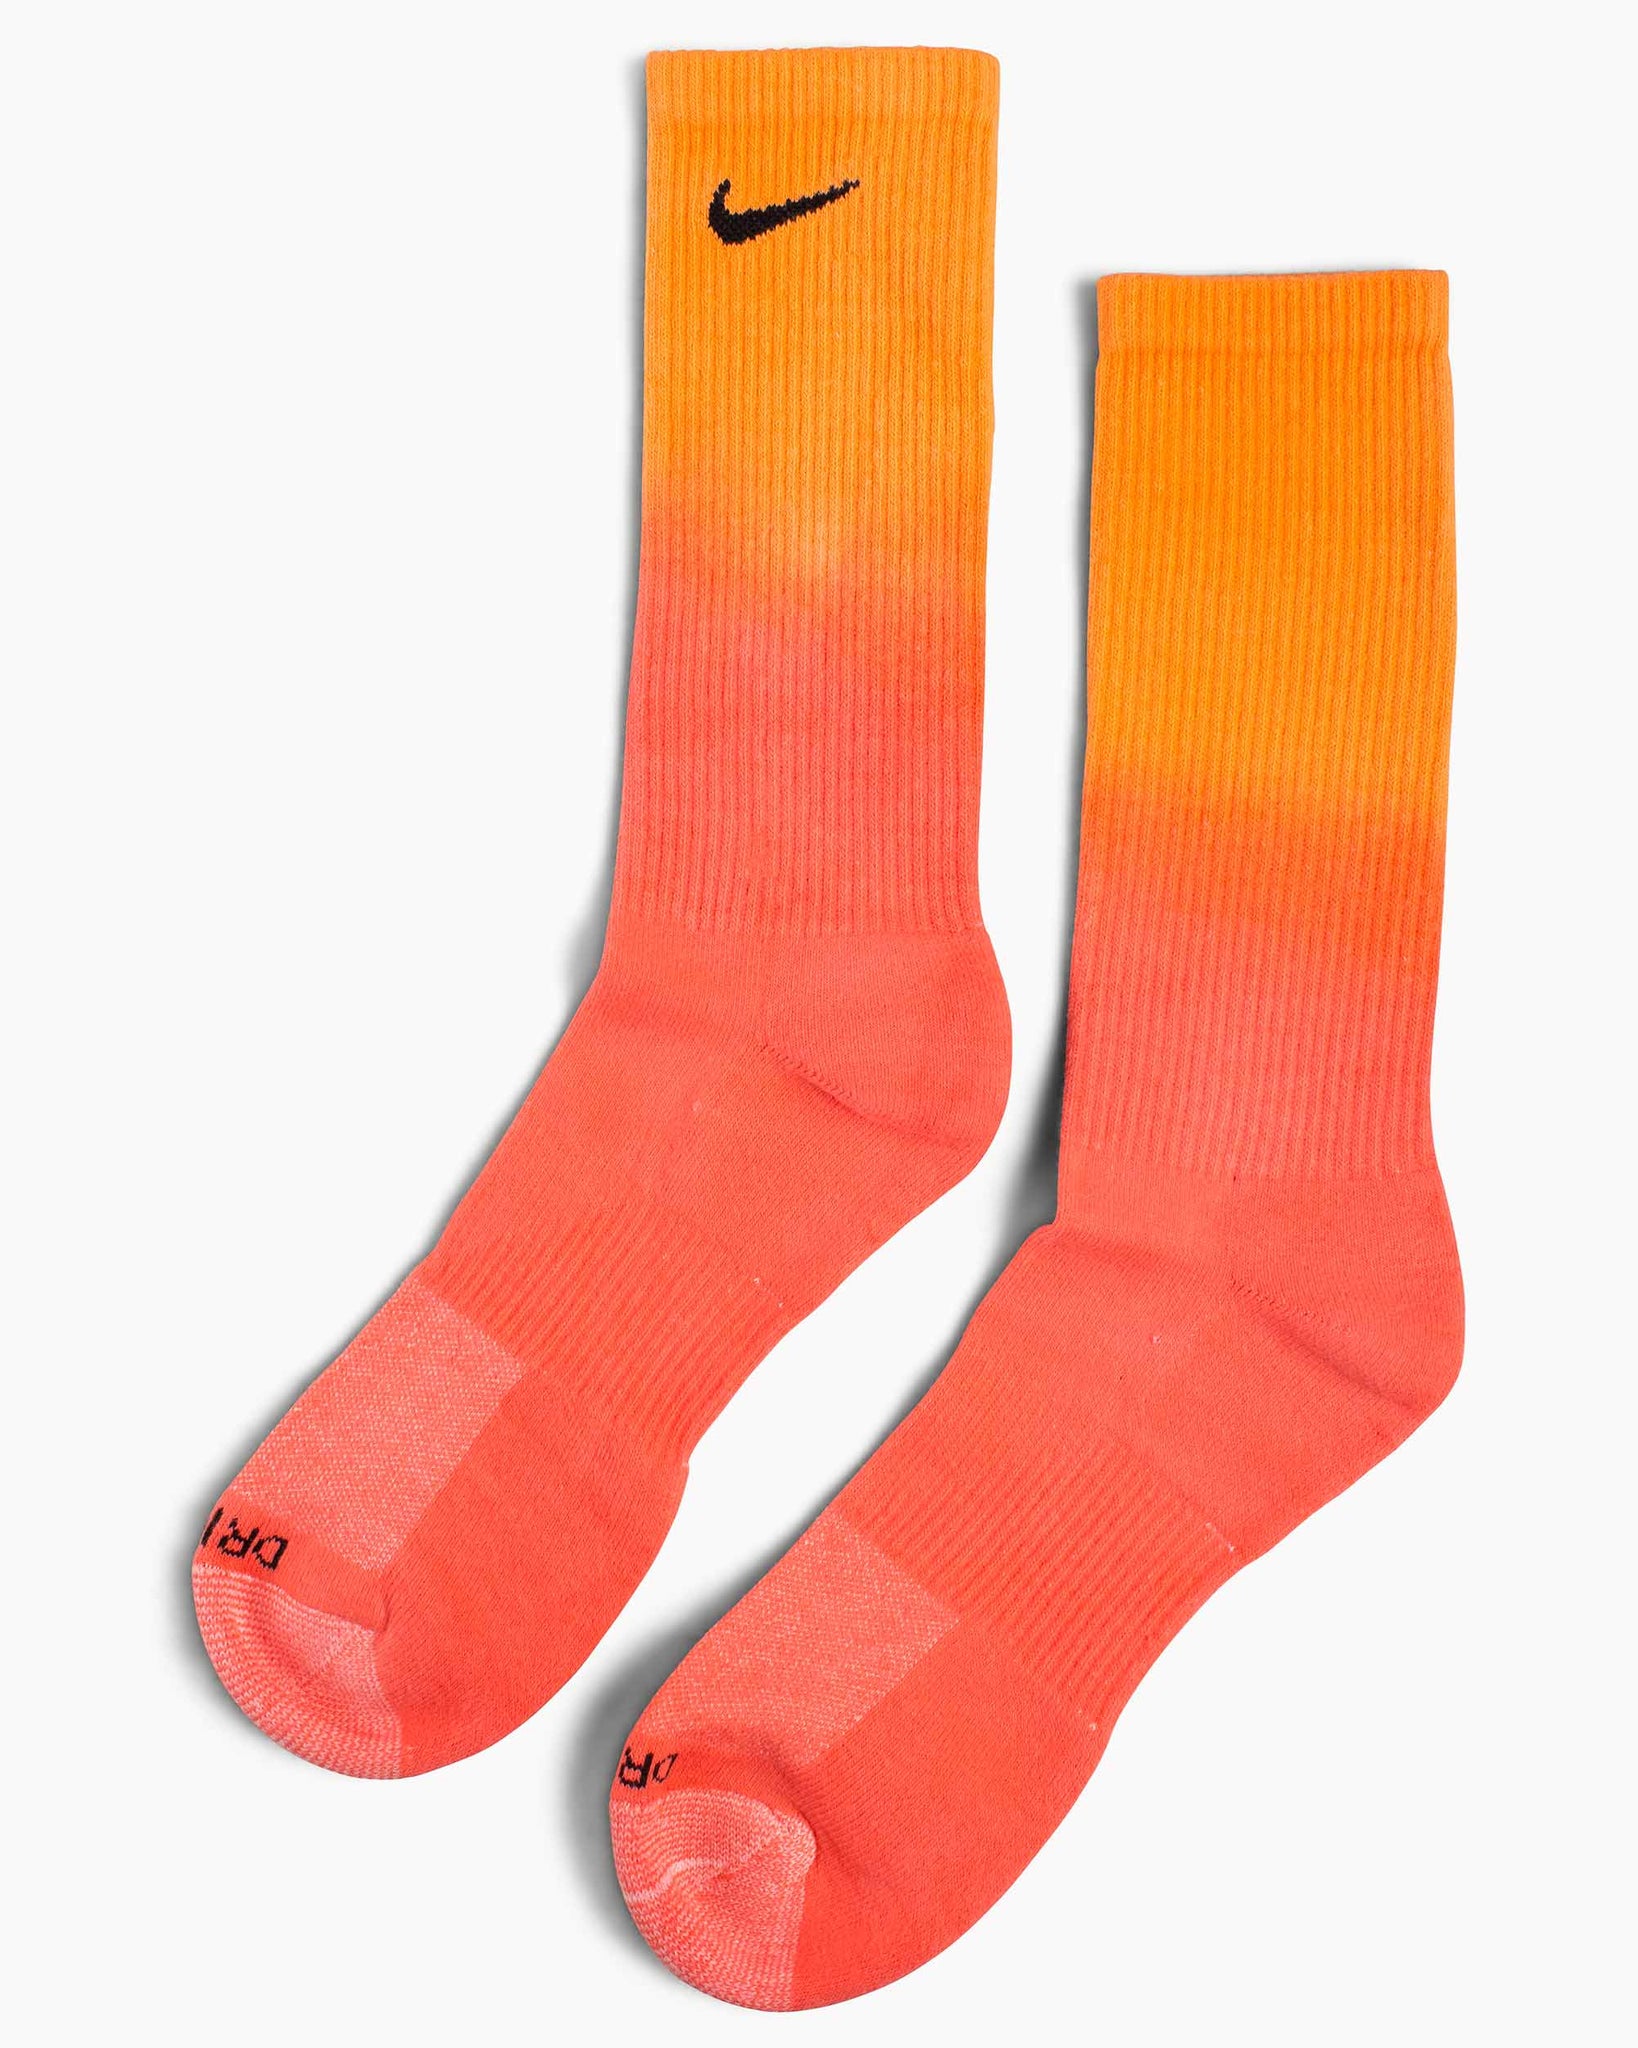 Nike Everyday Plus Cushioned Crew Socks Orange (2 Pack) Details